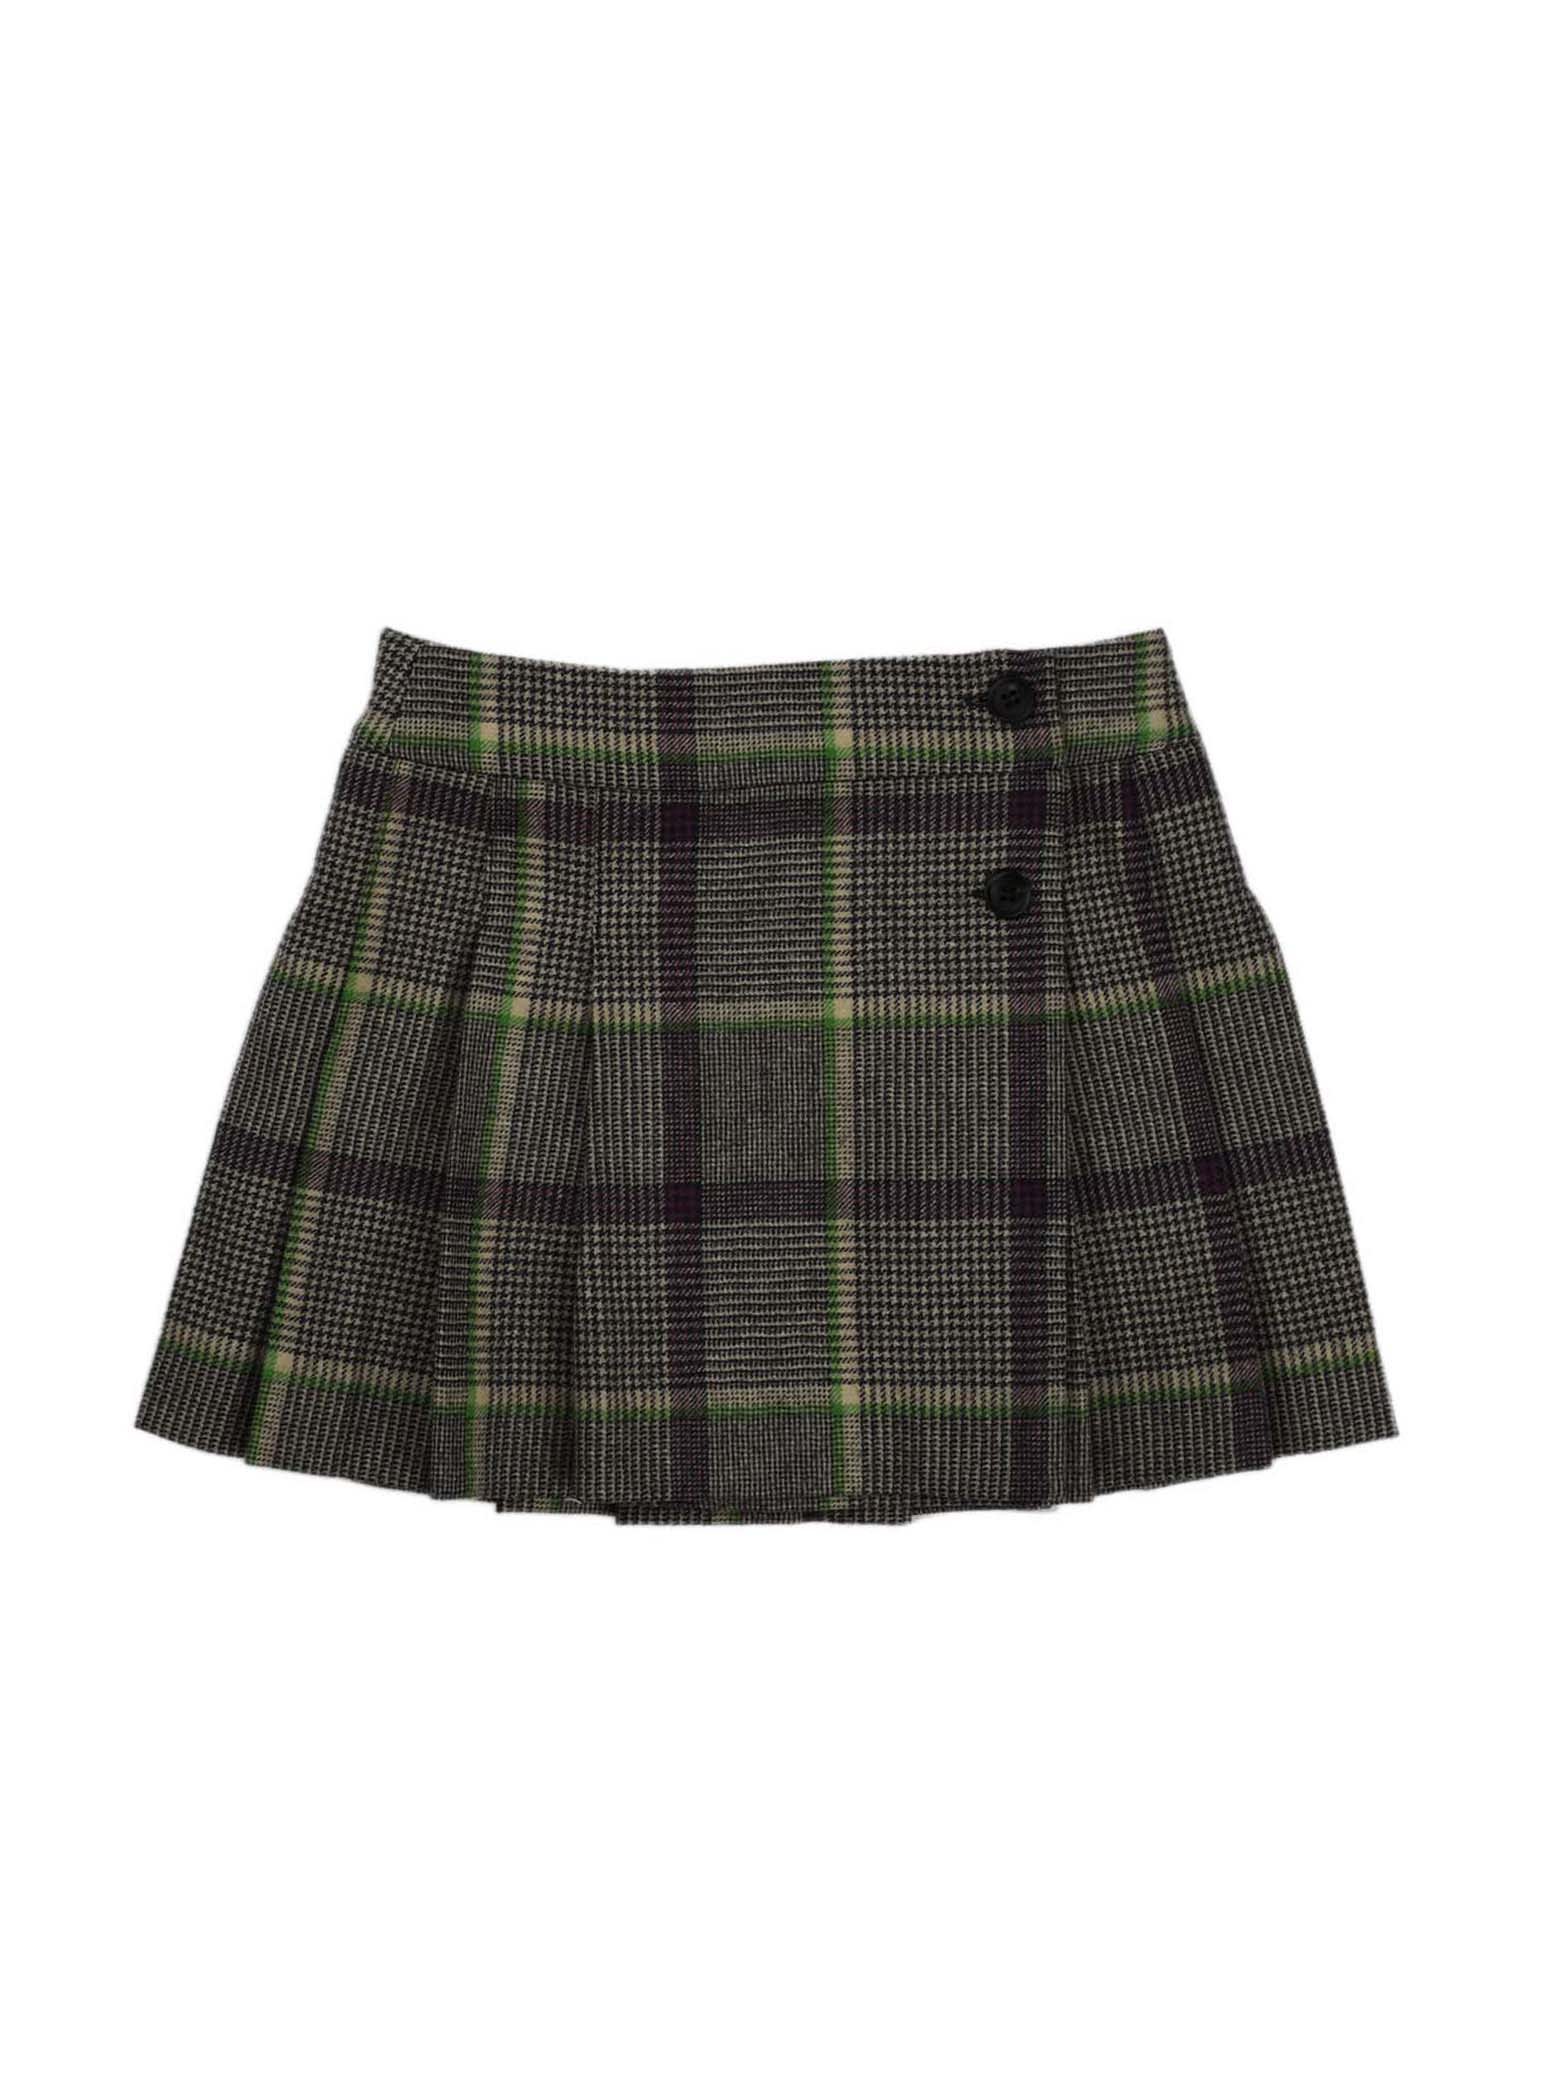 Bonpoint Scottish Skirt